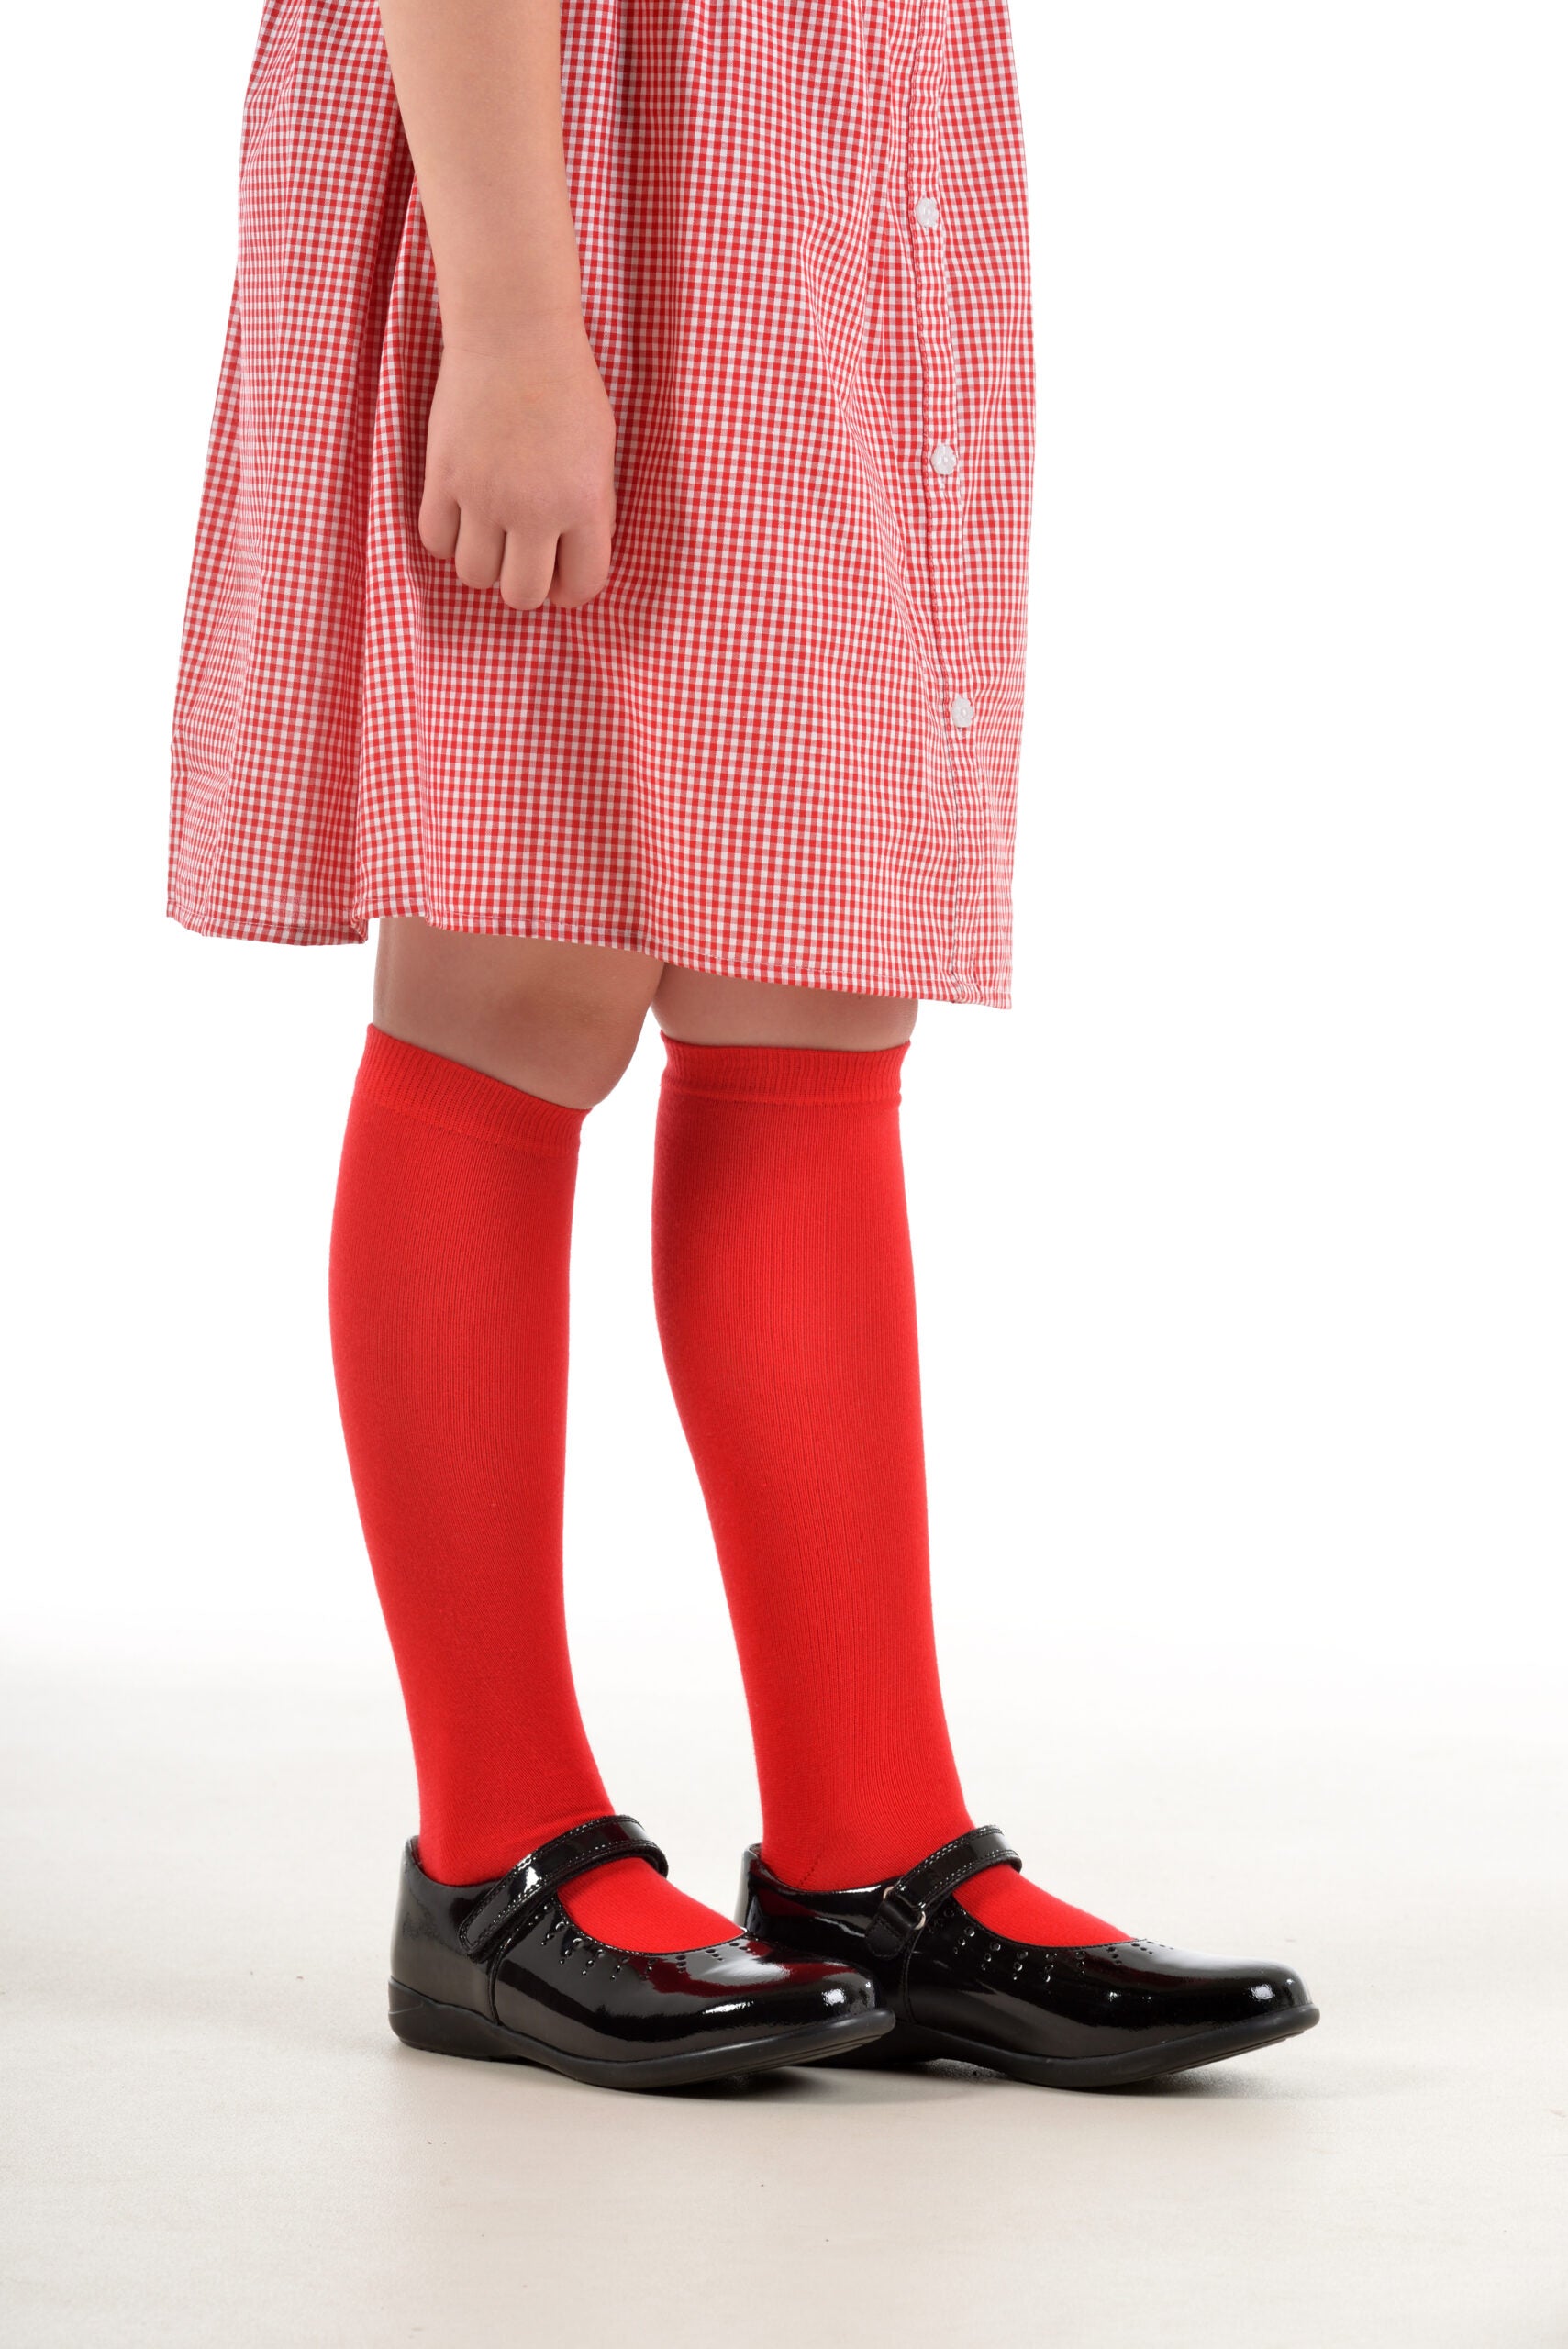 Pex - Knee High Socks with Comfort Toe - 2 pair pack - Kids & Adults